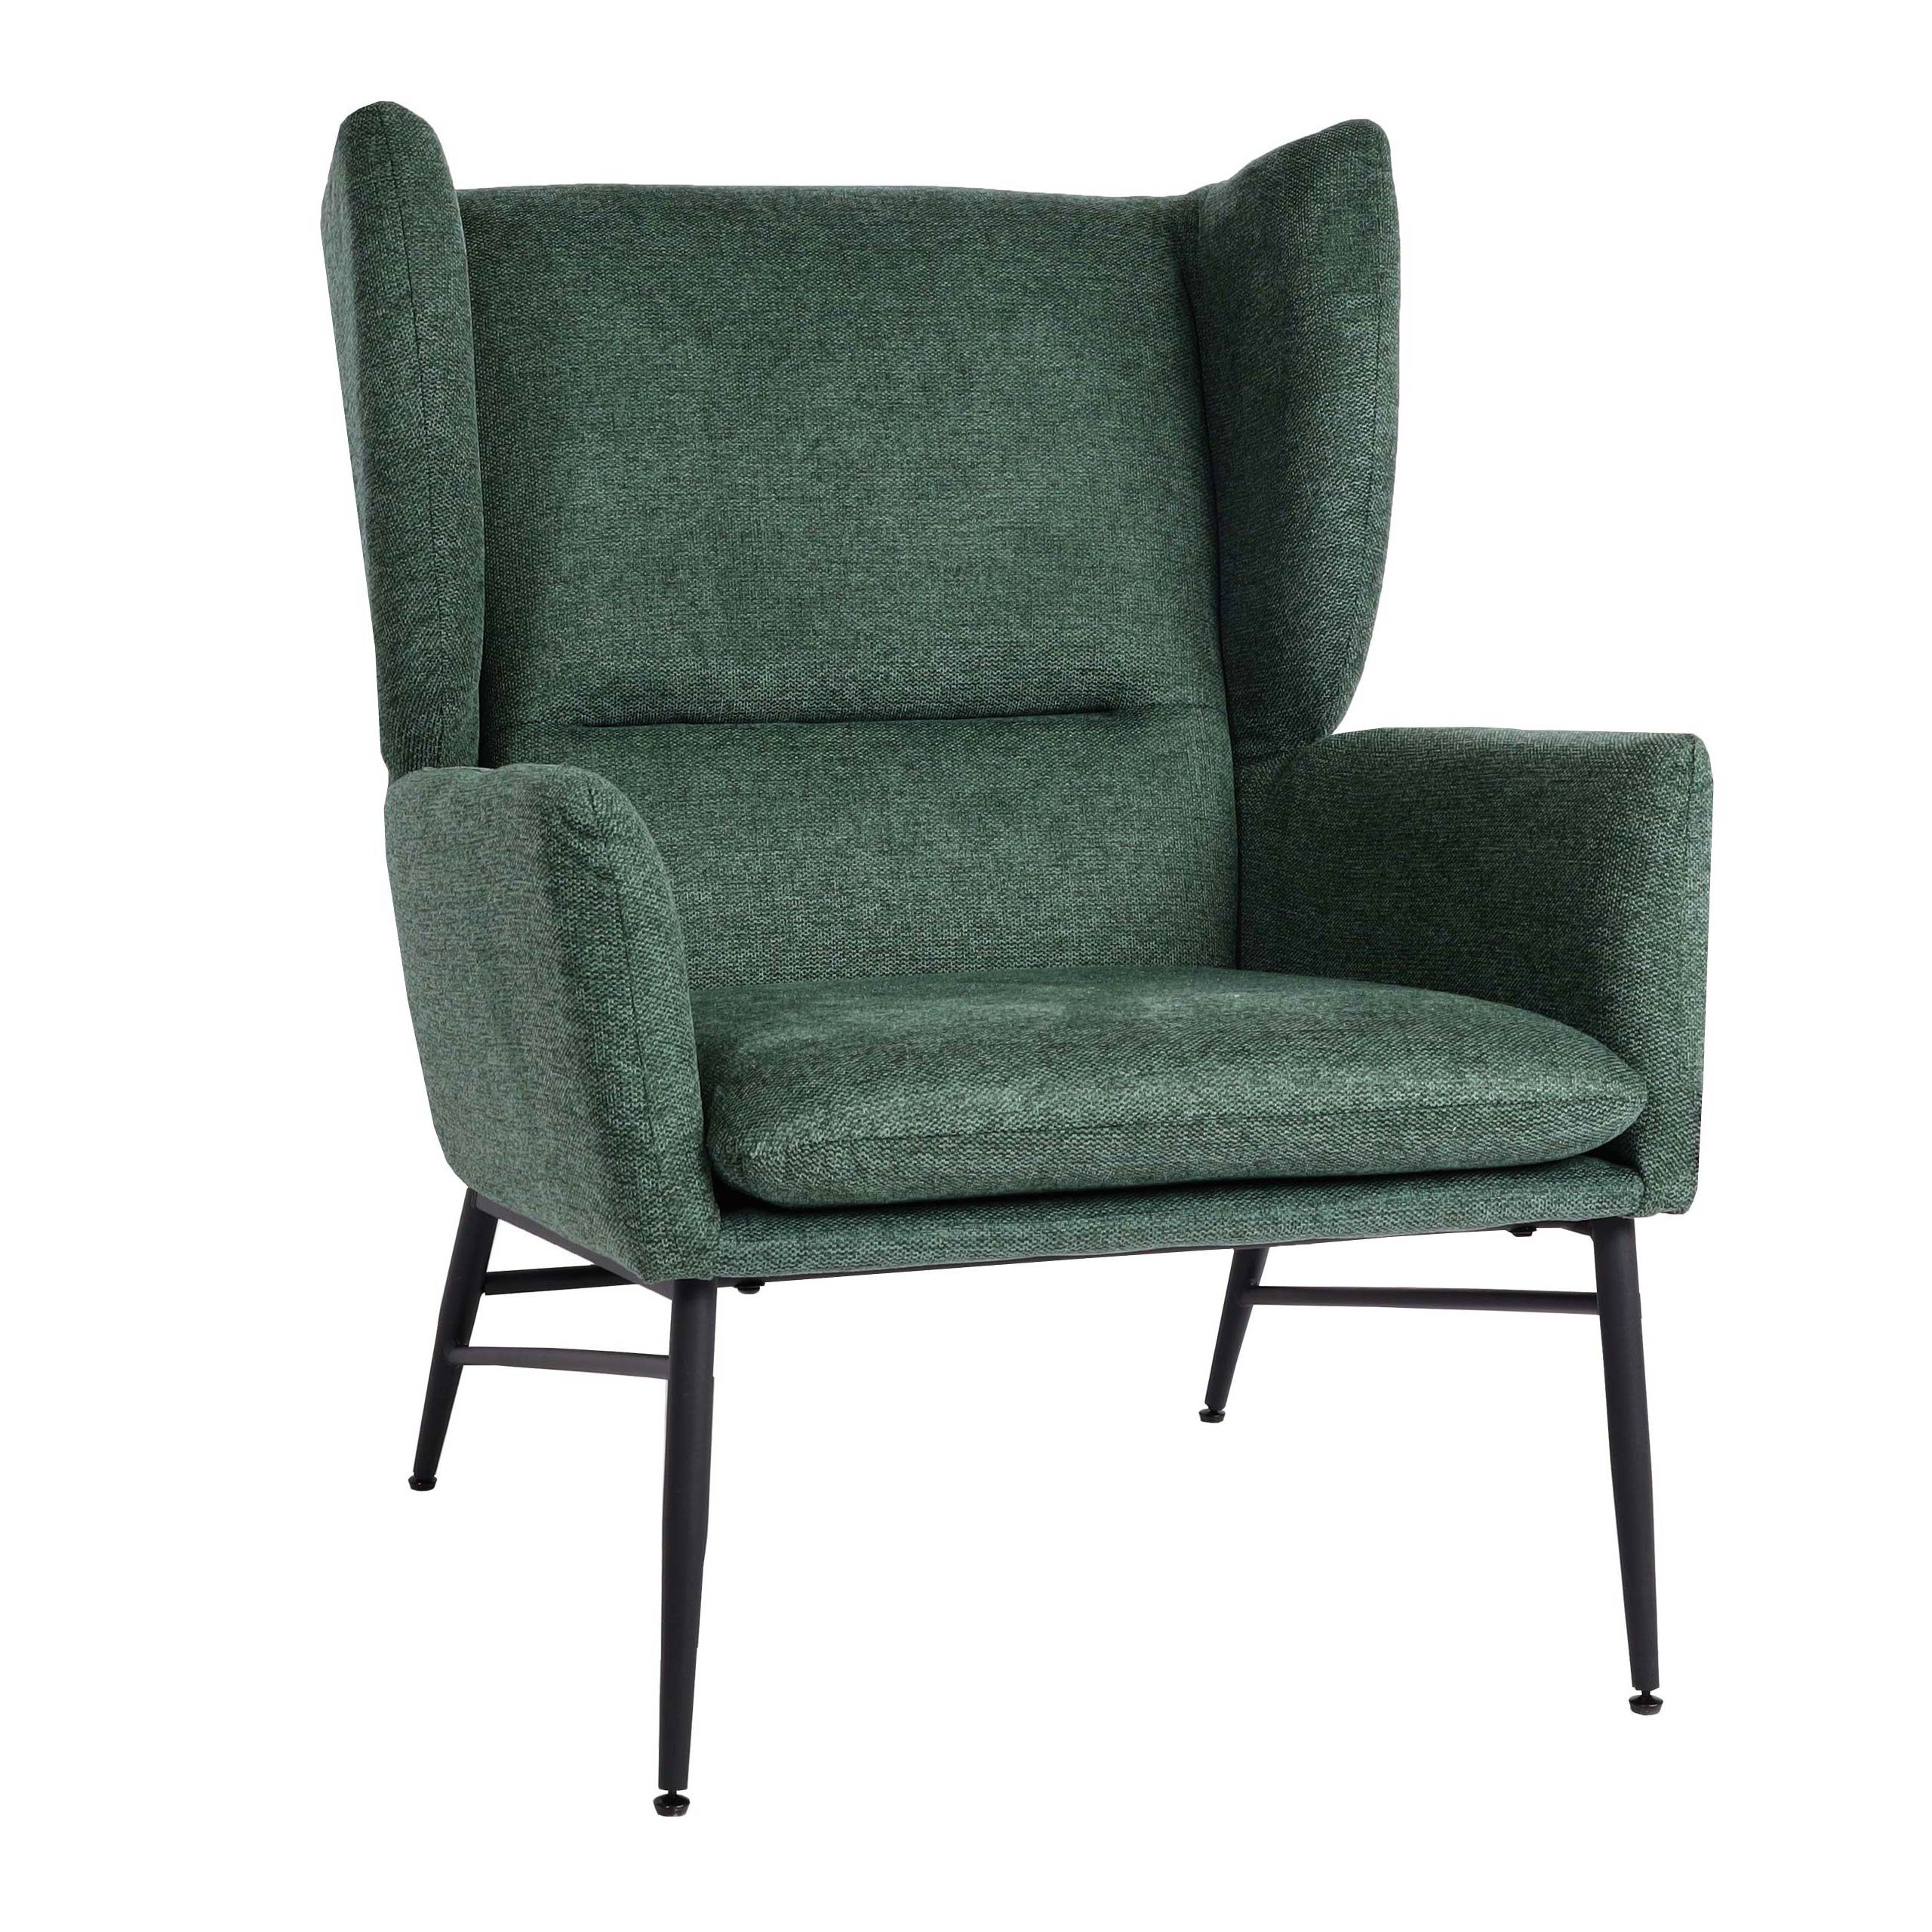 MCW Loungesessel MCW-L62, Extra breite Sitzfläche, Sitzkissen abnehmbar grün